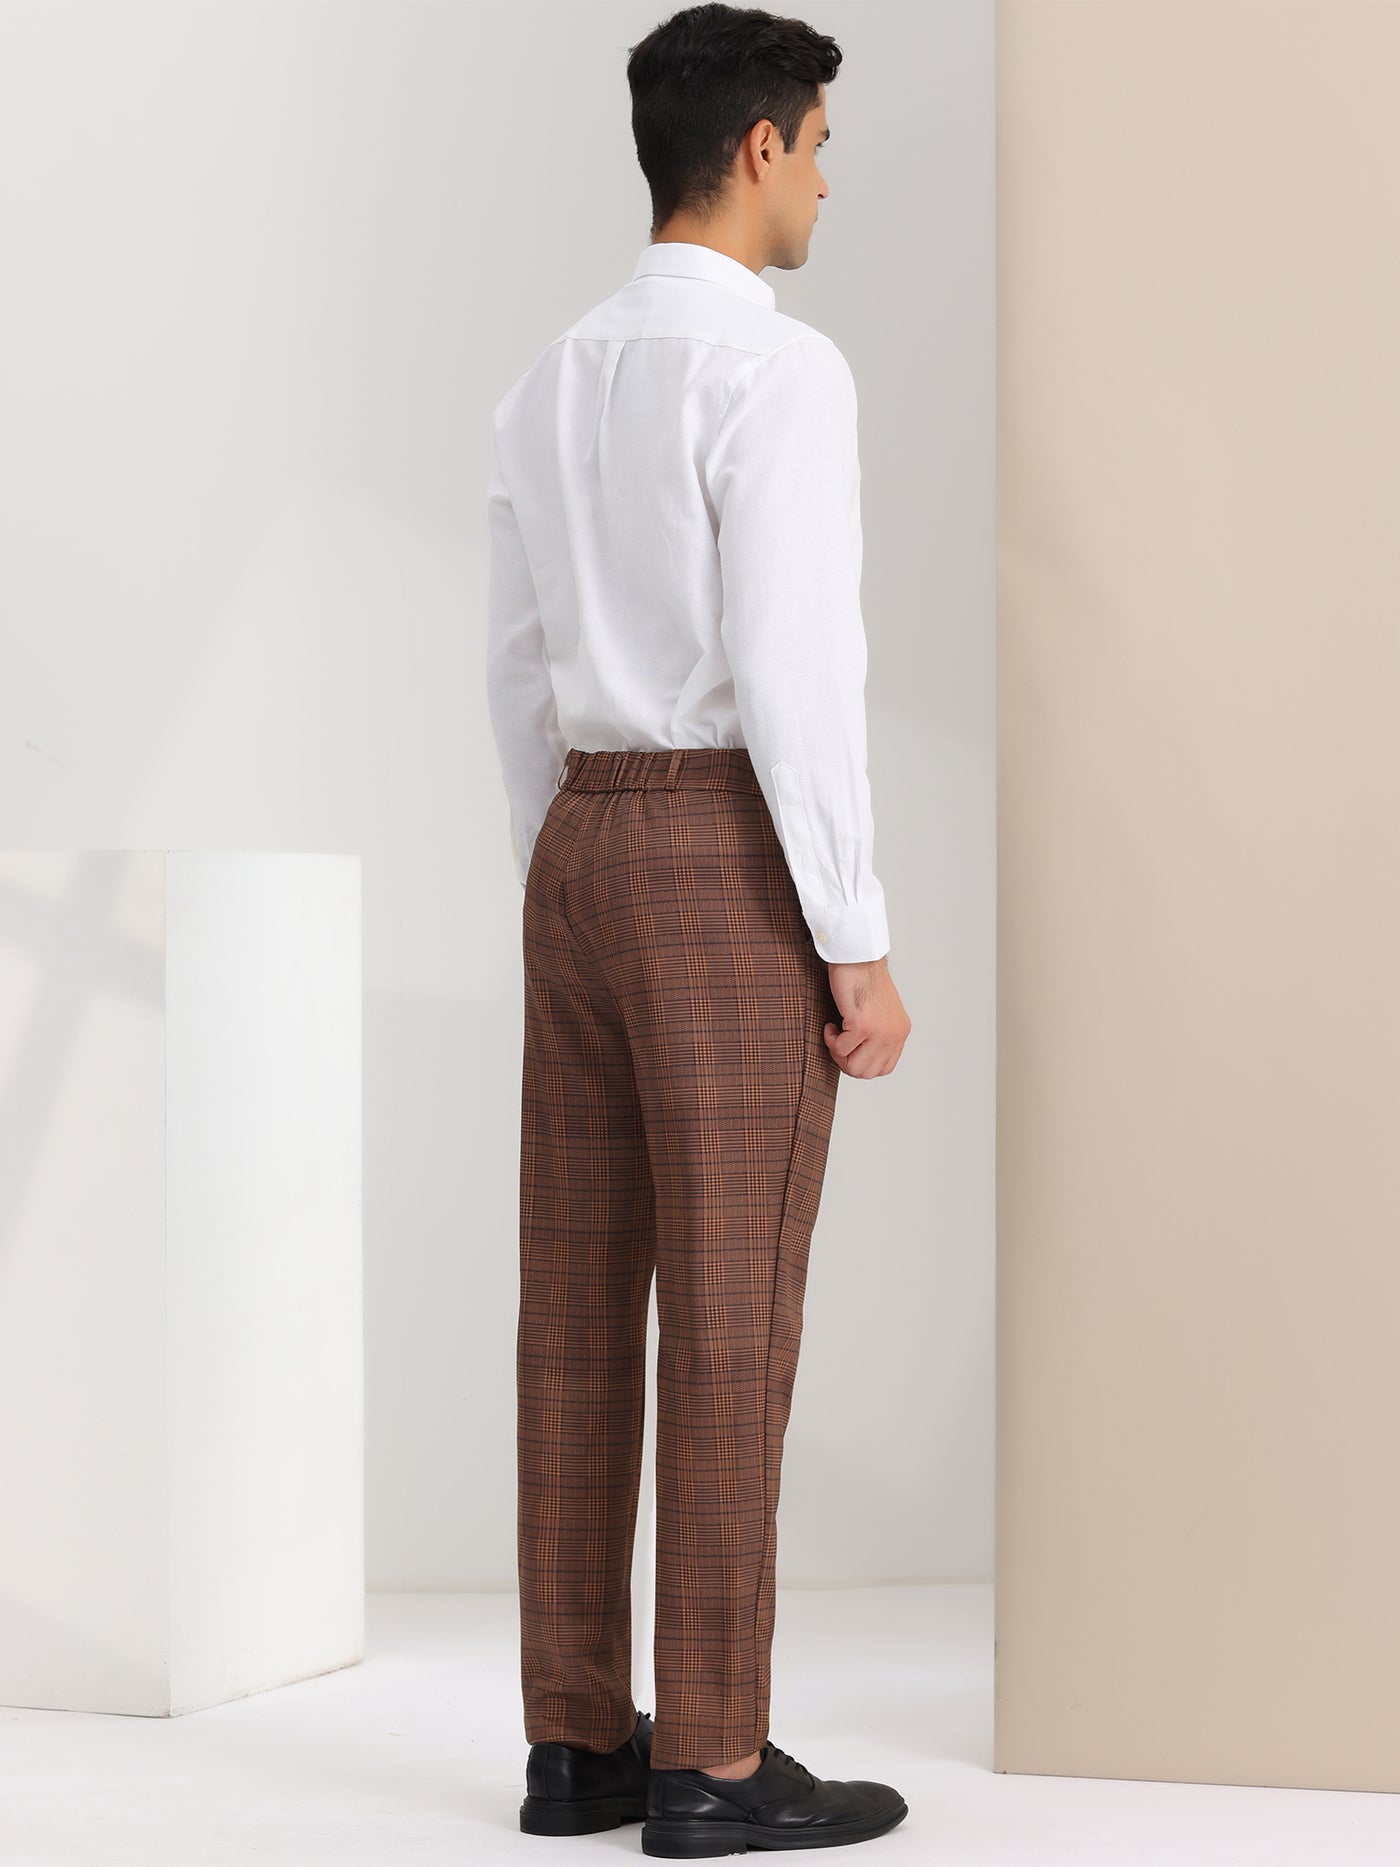 Bublédon Men's Checked Prom Trousers Regular Fit Formal Plaid Suit Pants